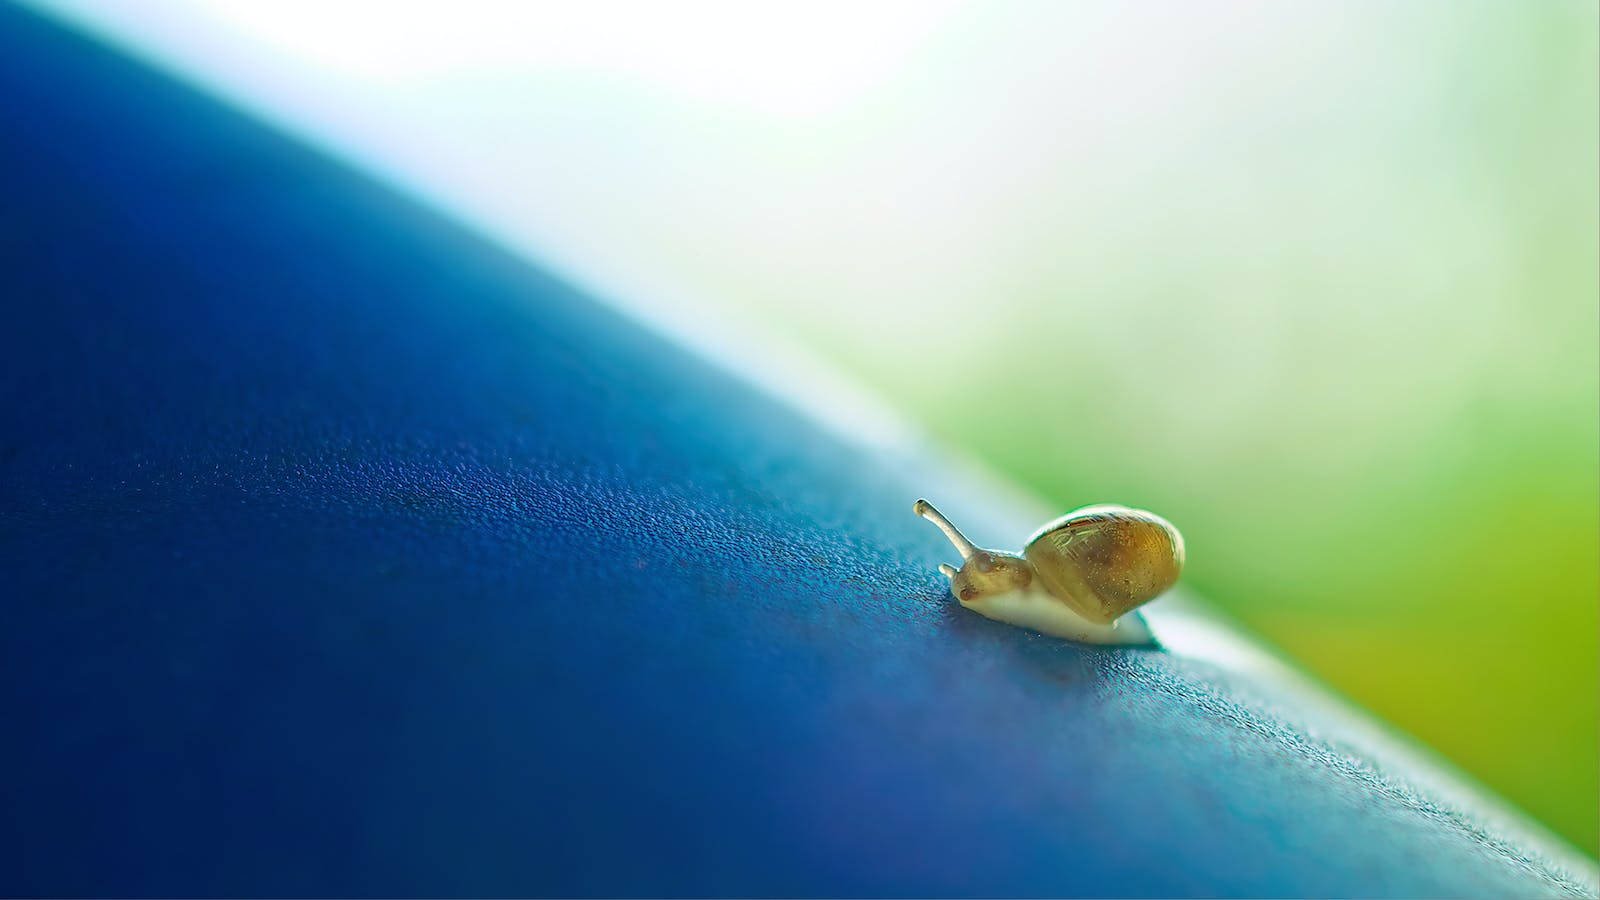 Tiny Snail Big World Background